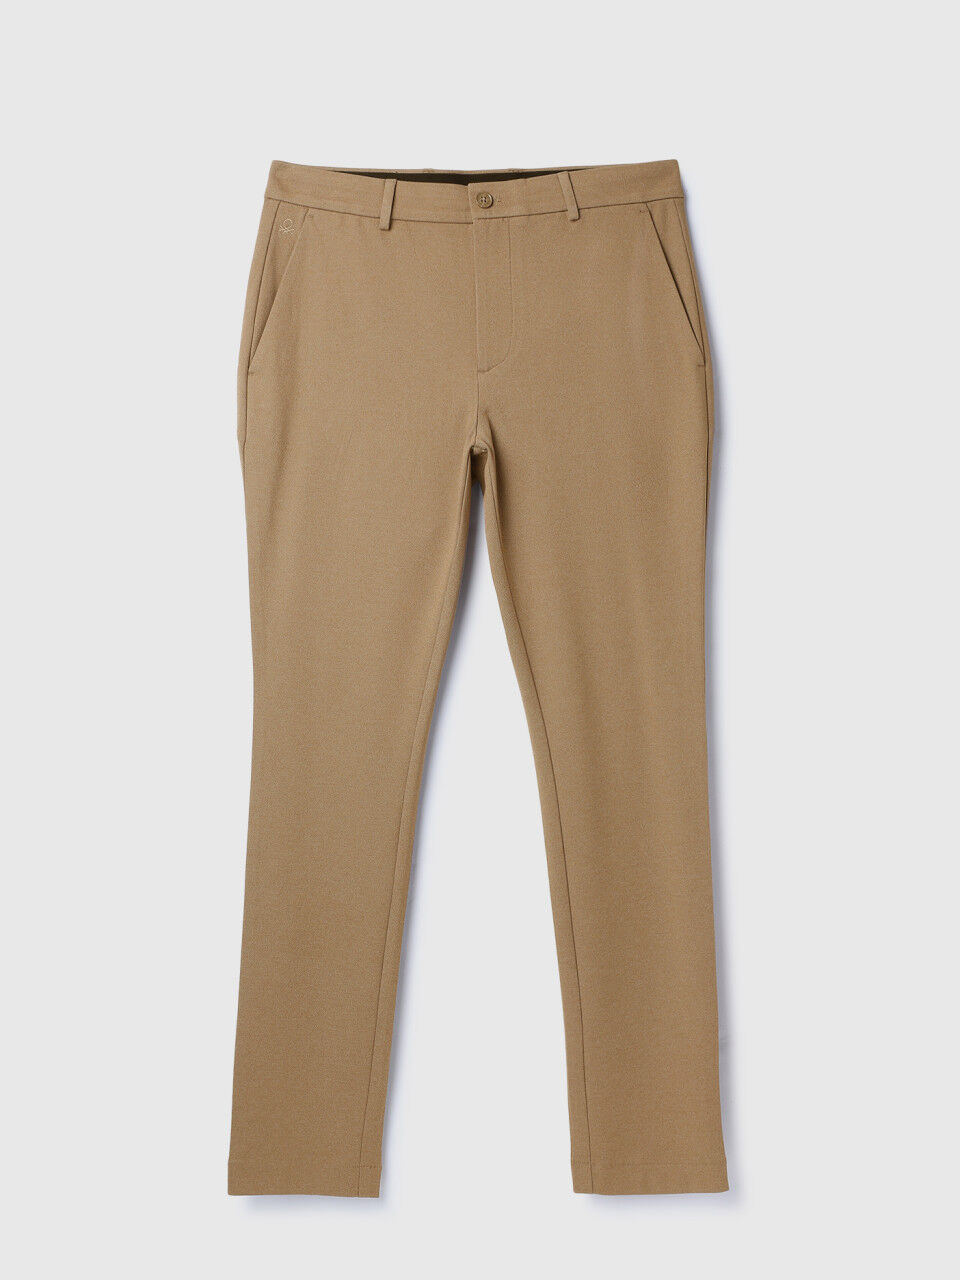 fcity.in - Mancrew Men Solid Khaki Trousers Pack 2 / Mancrew Men Trousers